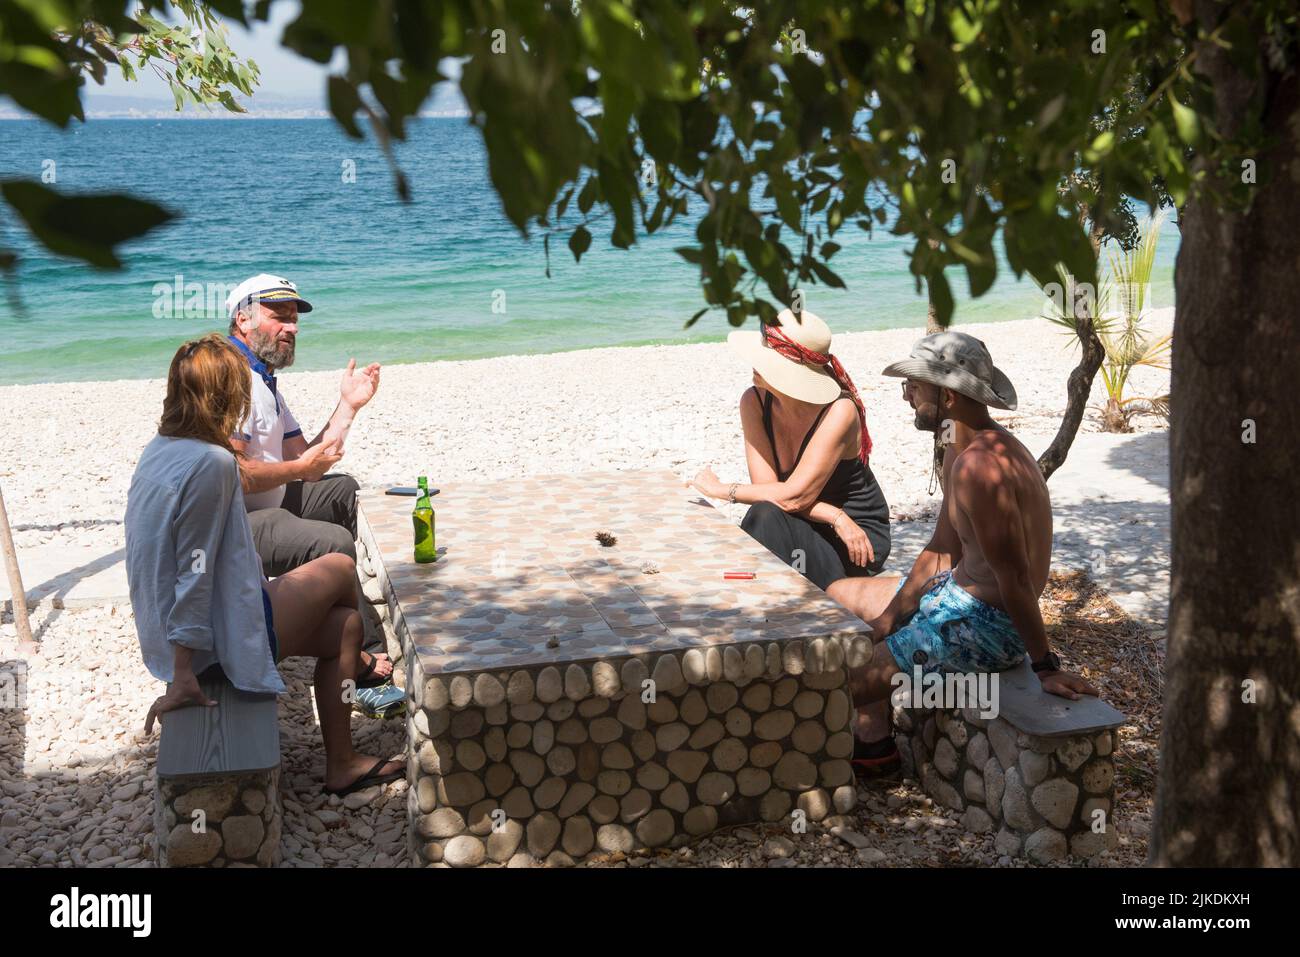 Four persons sitting at a table on the Beach in Zhanpovel Bay, Peninsula of Karaburun, within the Karaburun-Sazan Marine Parc, Vlore bay, Albania, Stock Photo